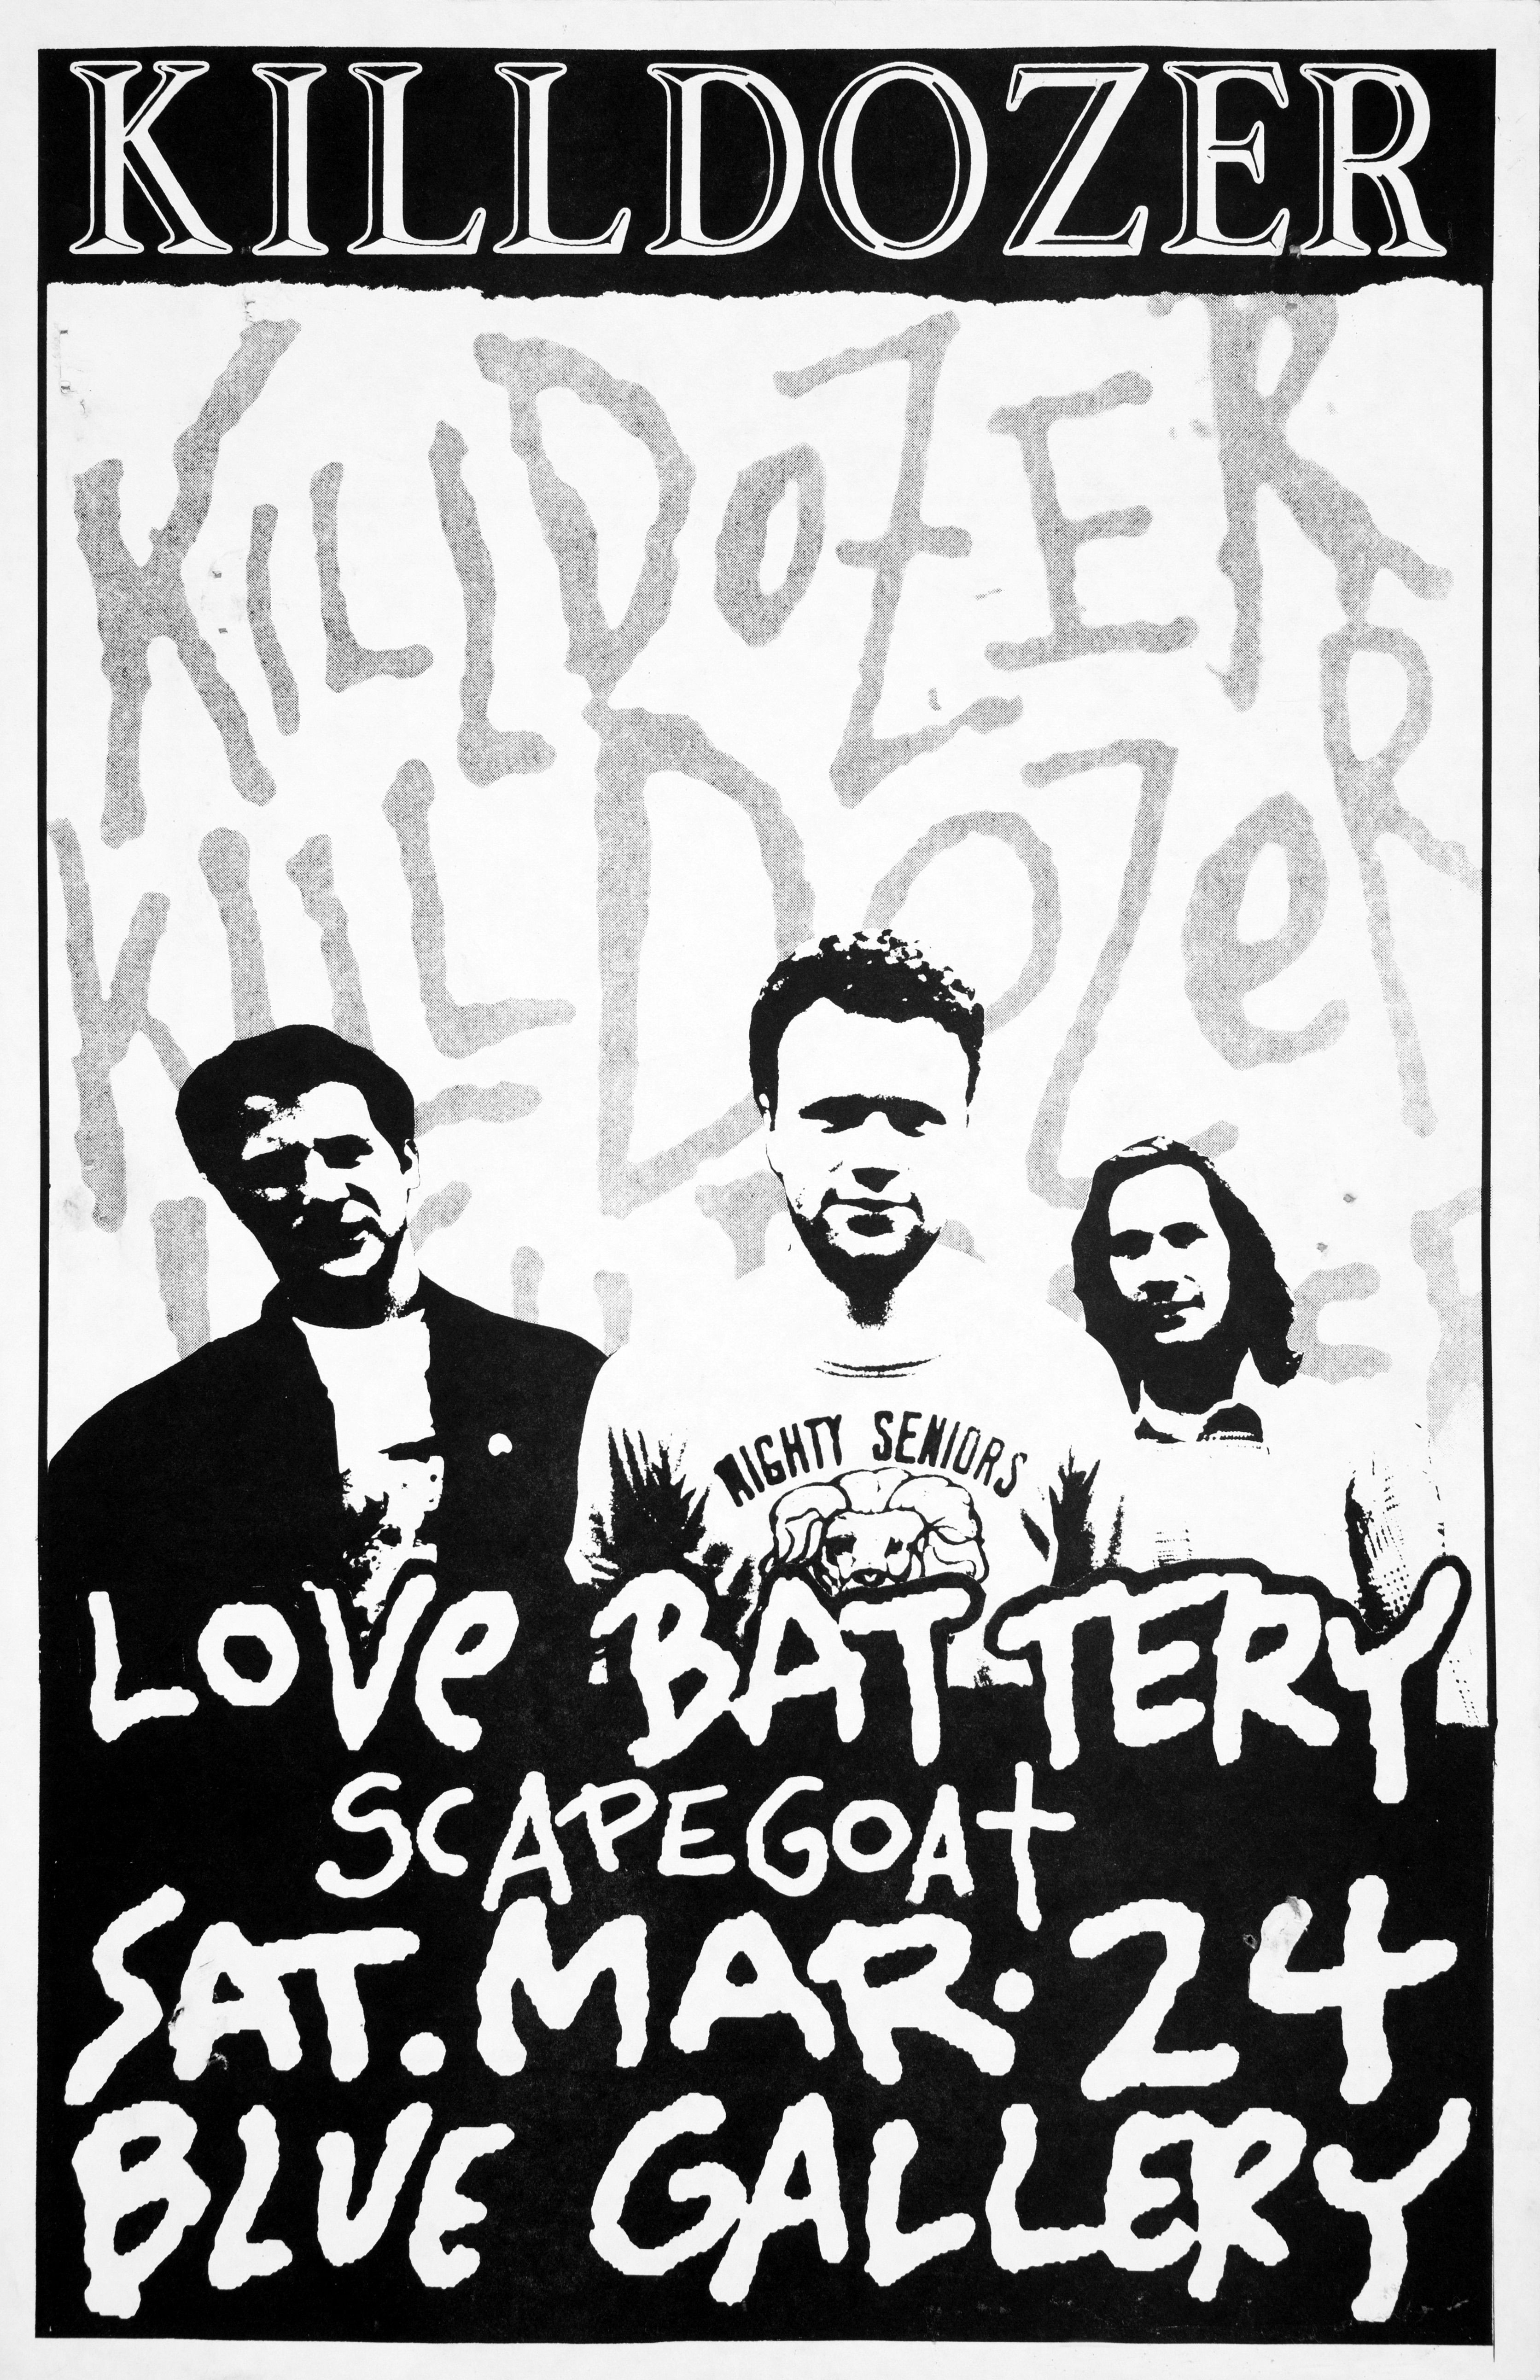 MXP-149.8 Killdozer Blue Gallery 1990 Concert Poster